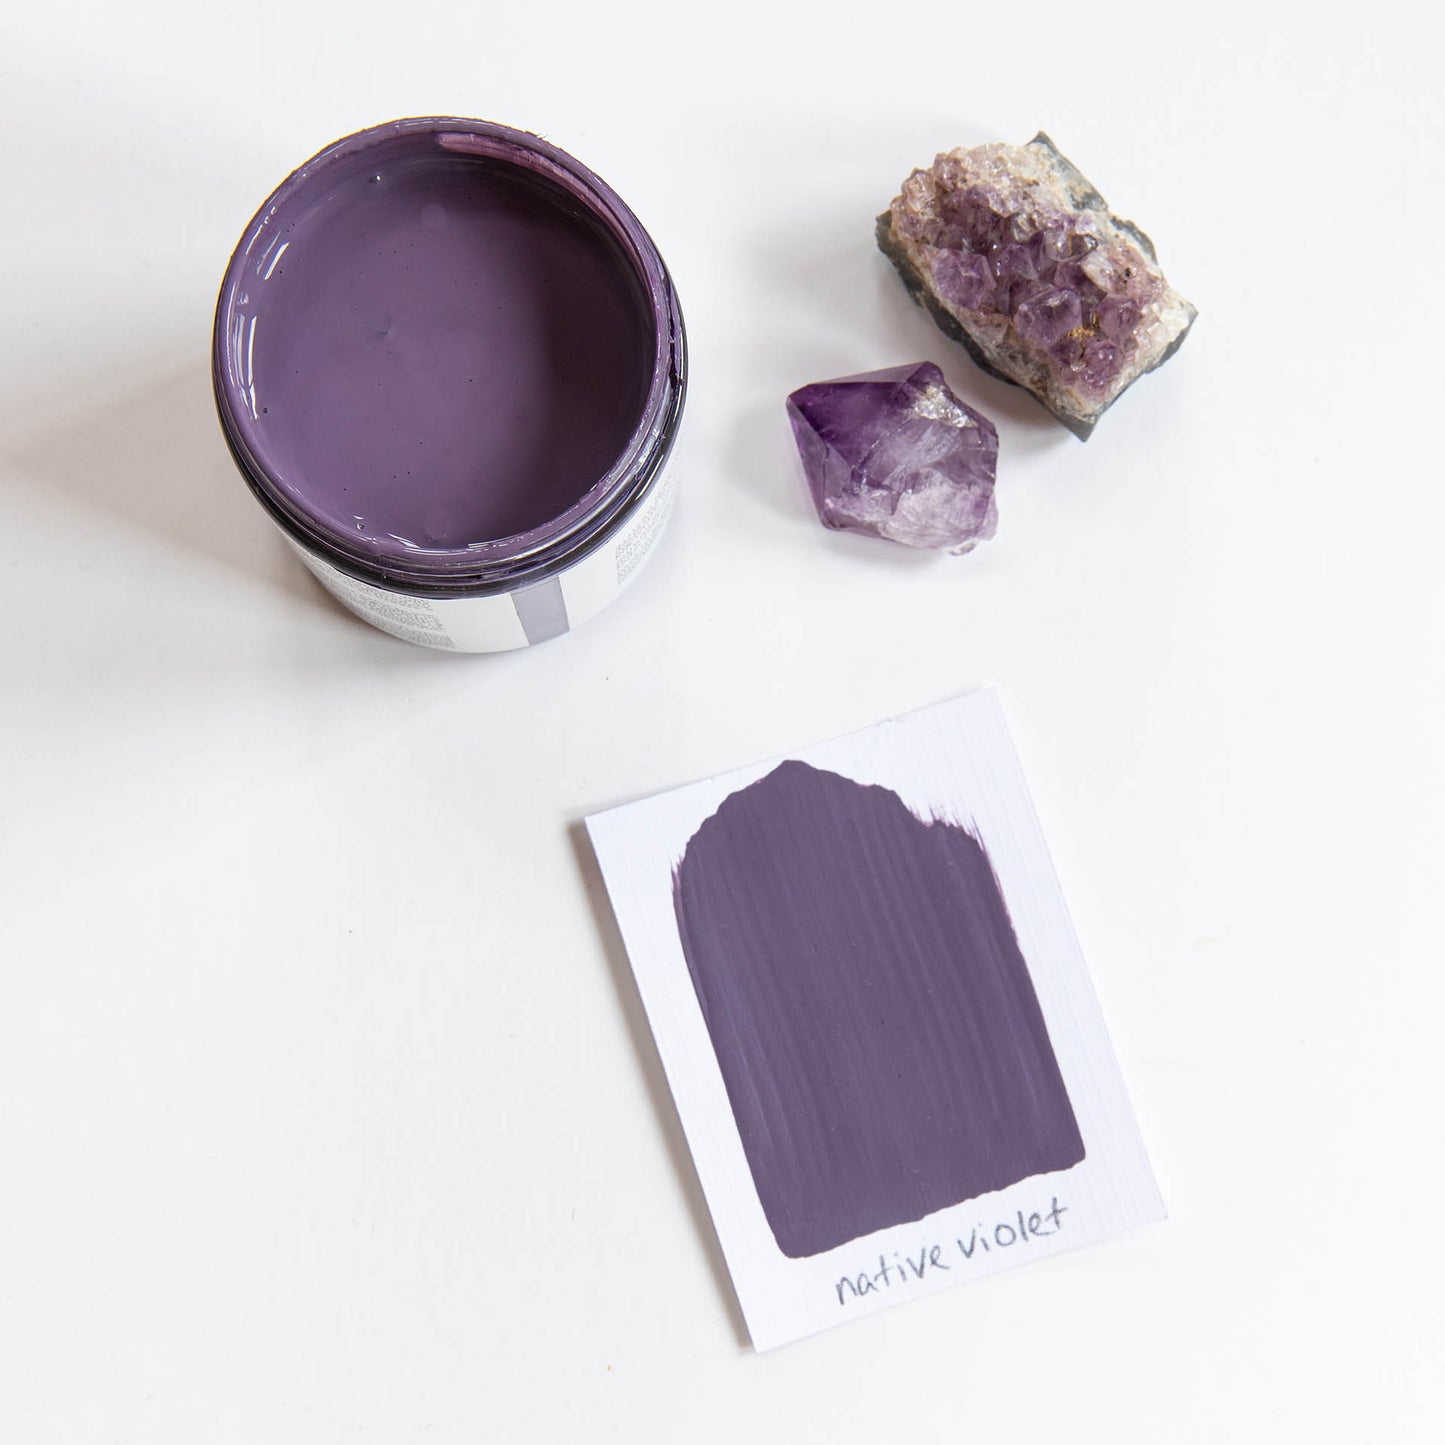 Artisan Native Violet Mineral Paint